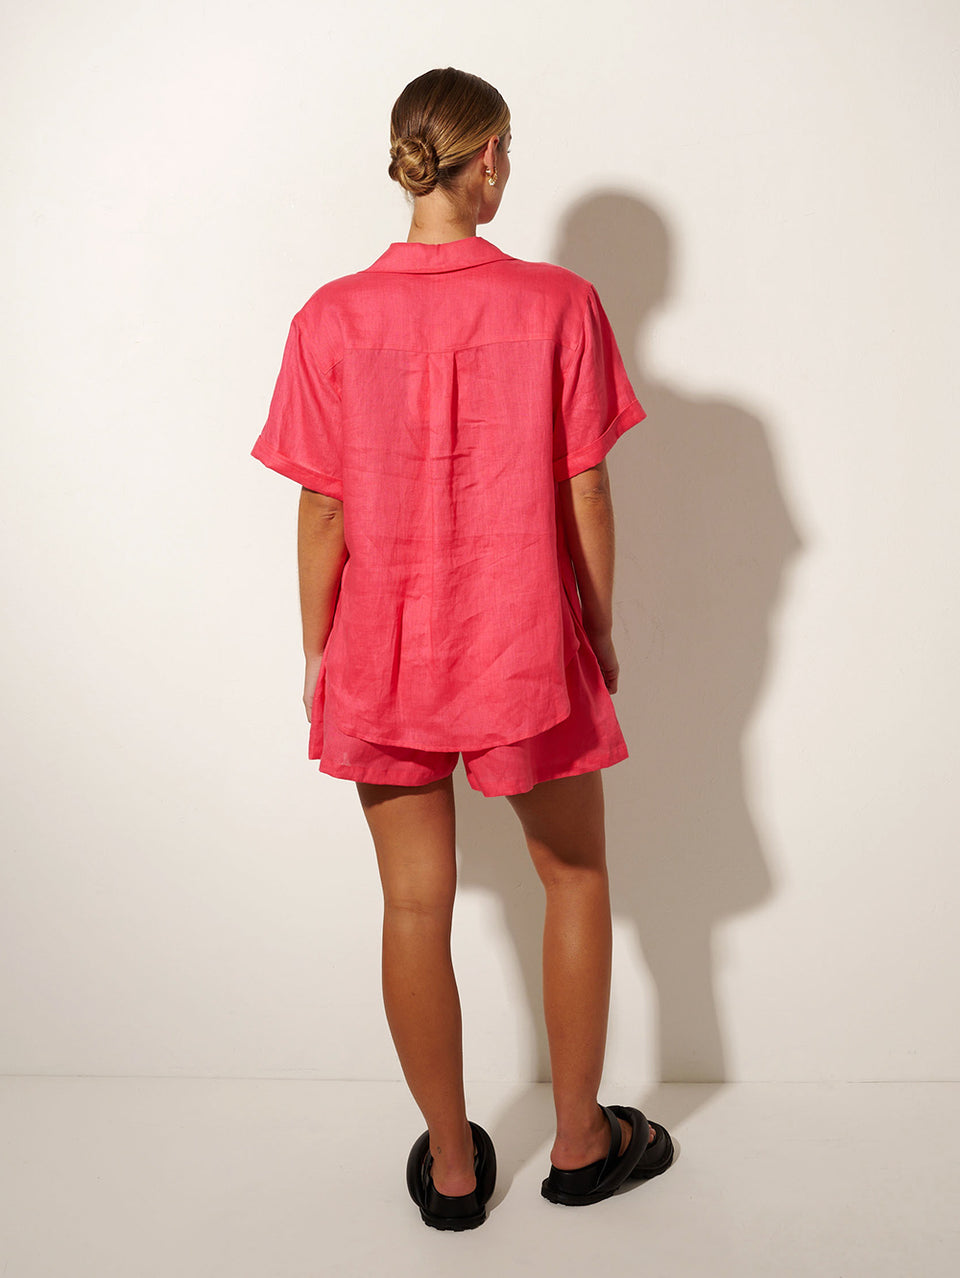 KIVARI Jacana Short | Model wears Pink Shorts Back View